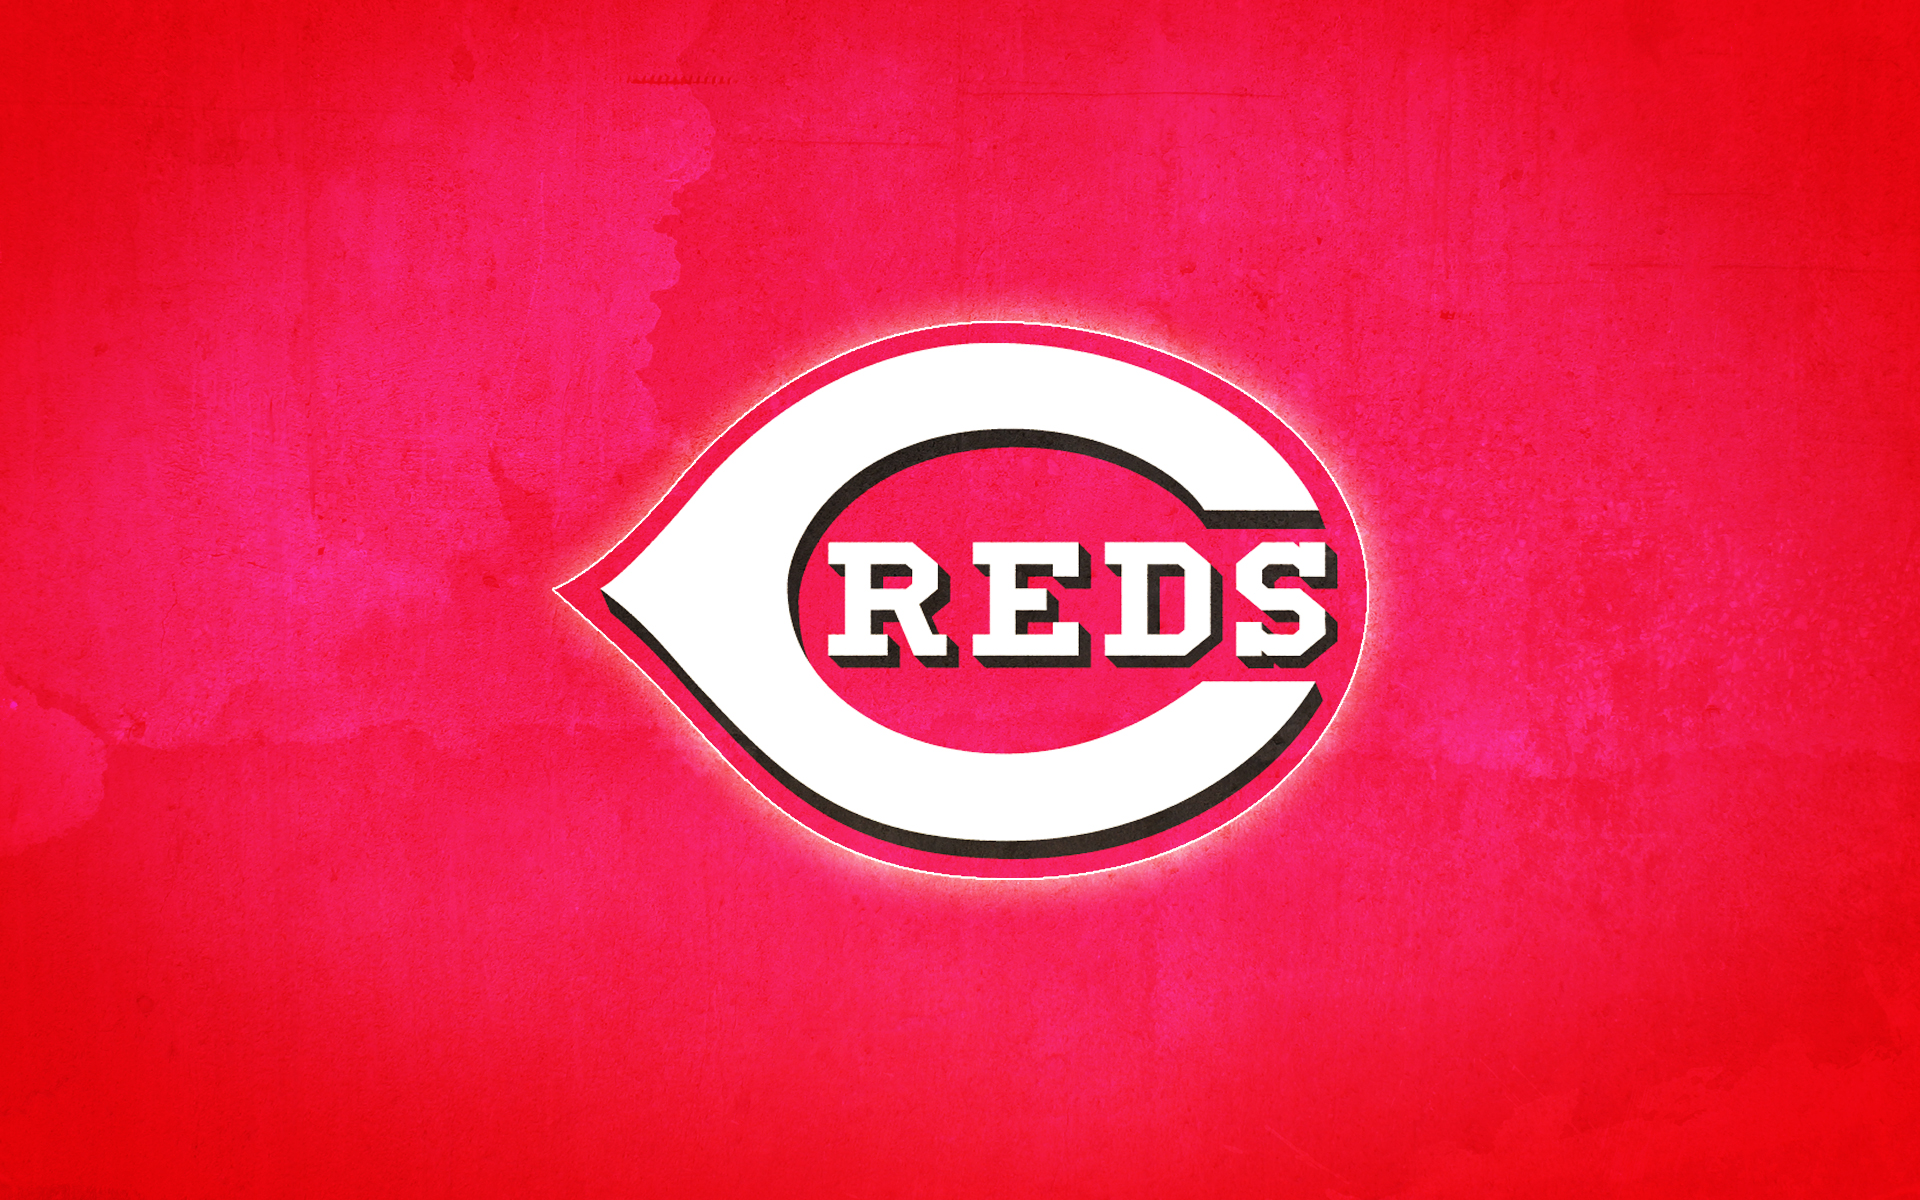 Cincinnati Reds 1920 x 1200 1024 x 640